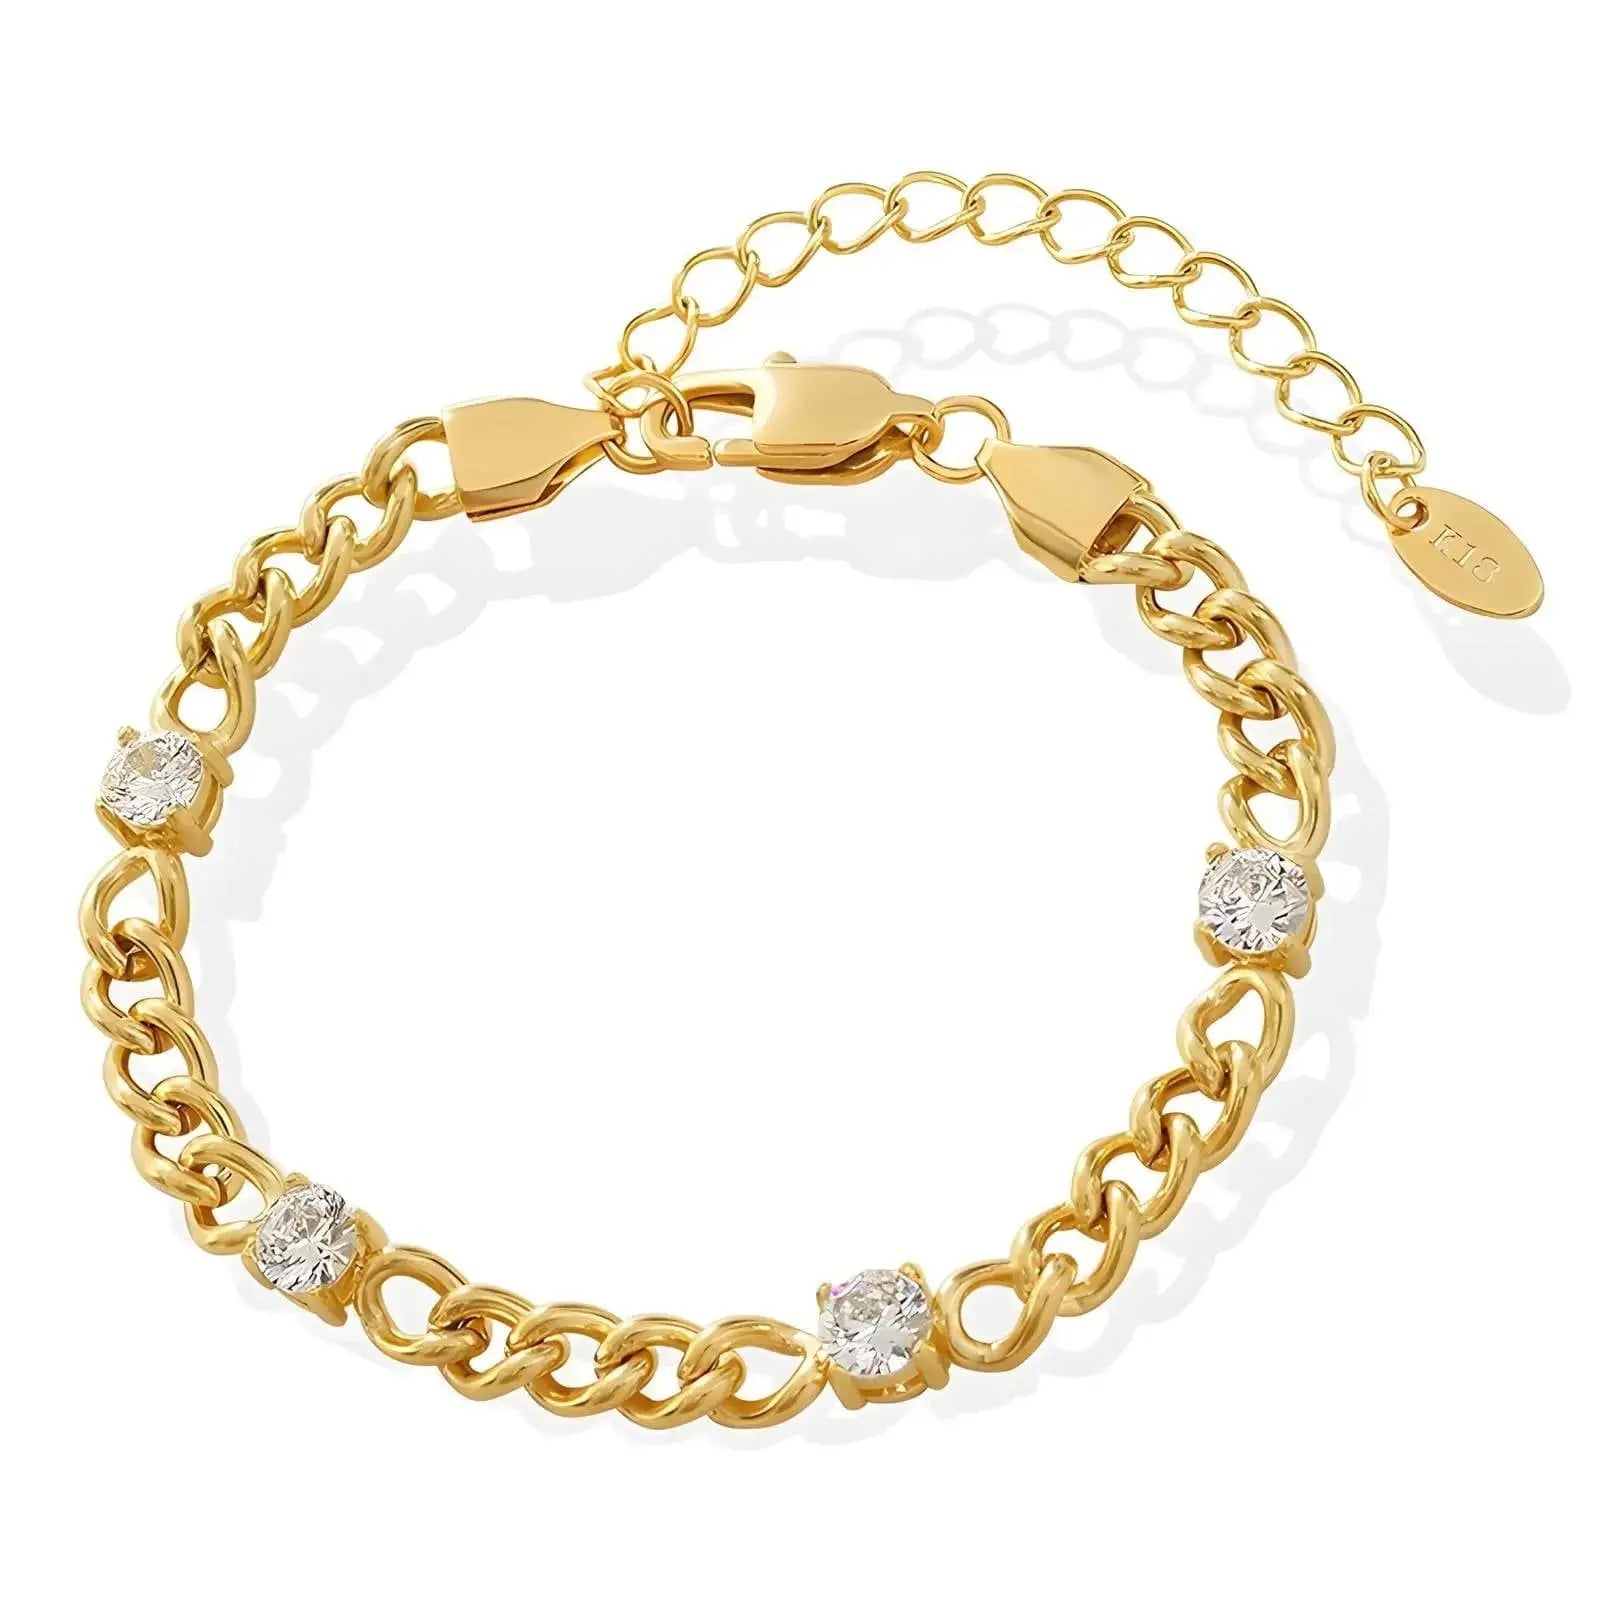 Girls Best Friend 18K Gold Plated Bracelet - Akalia